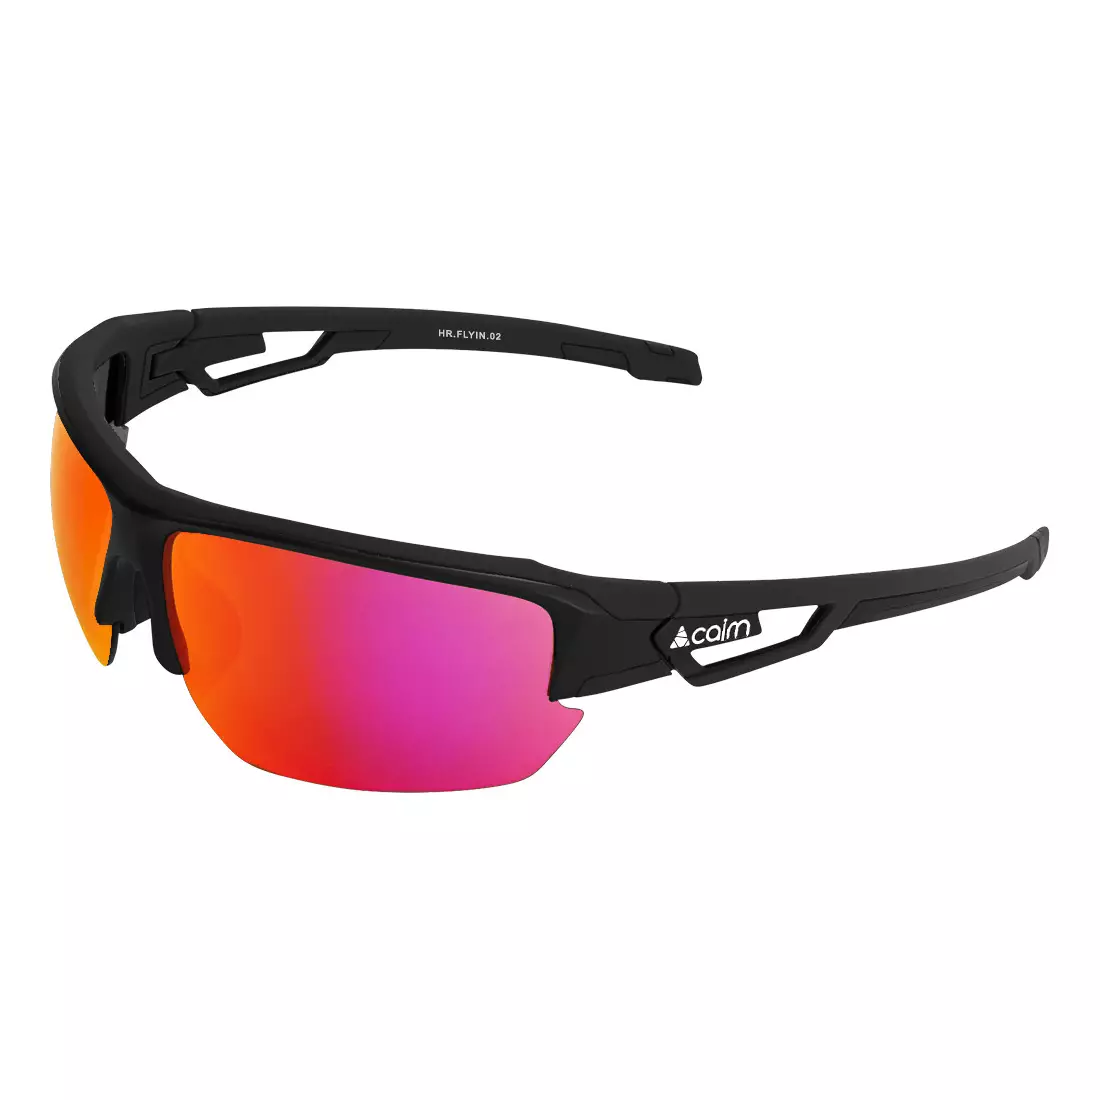 CAIRN Sports glasses FLYIN HIGH CONTRAST 02, black HRCFLYIN02